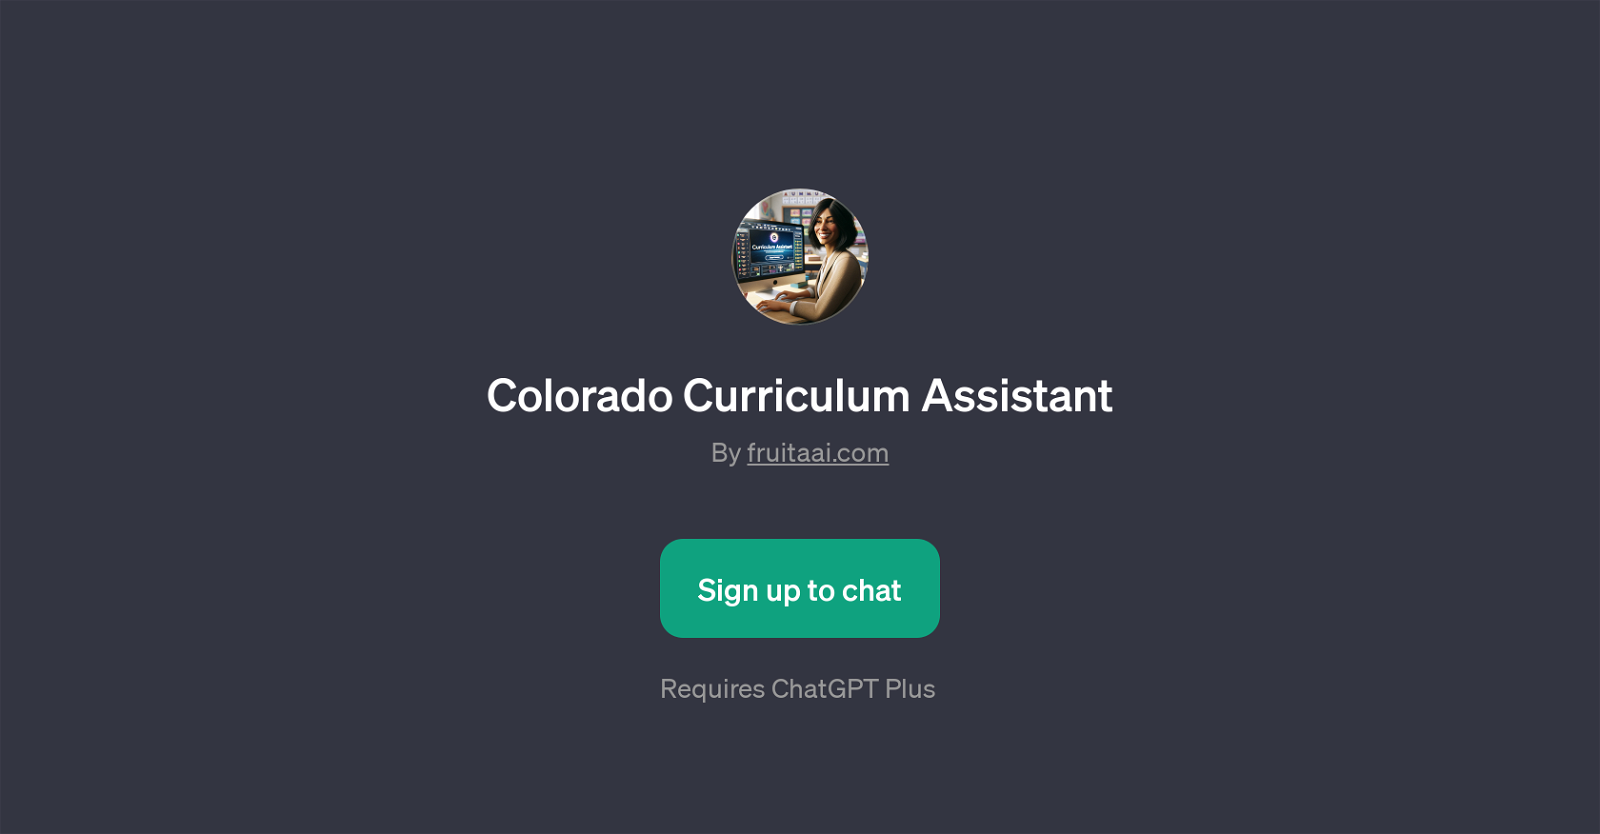 Colorado Curriculum Assistant website